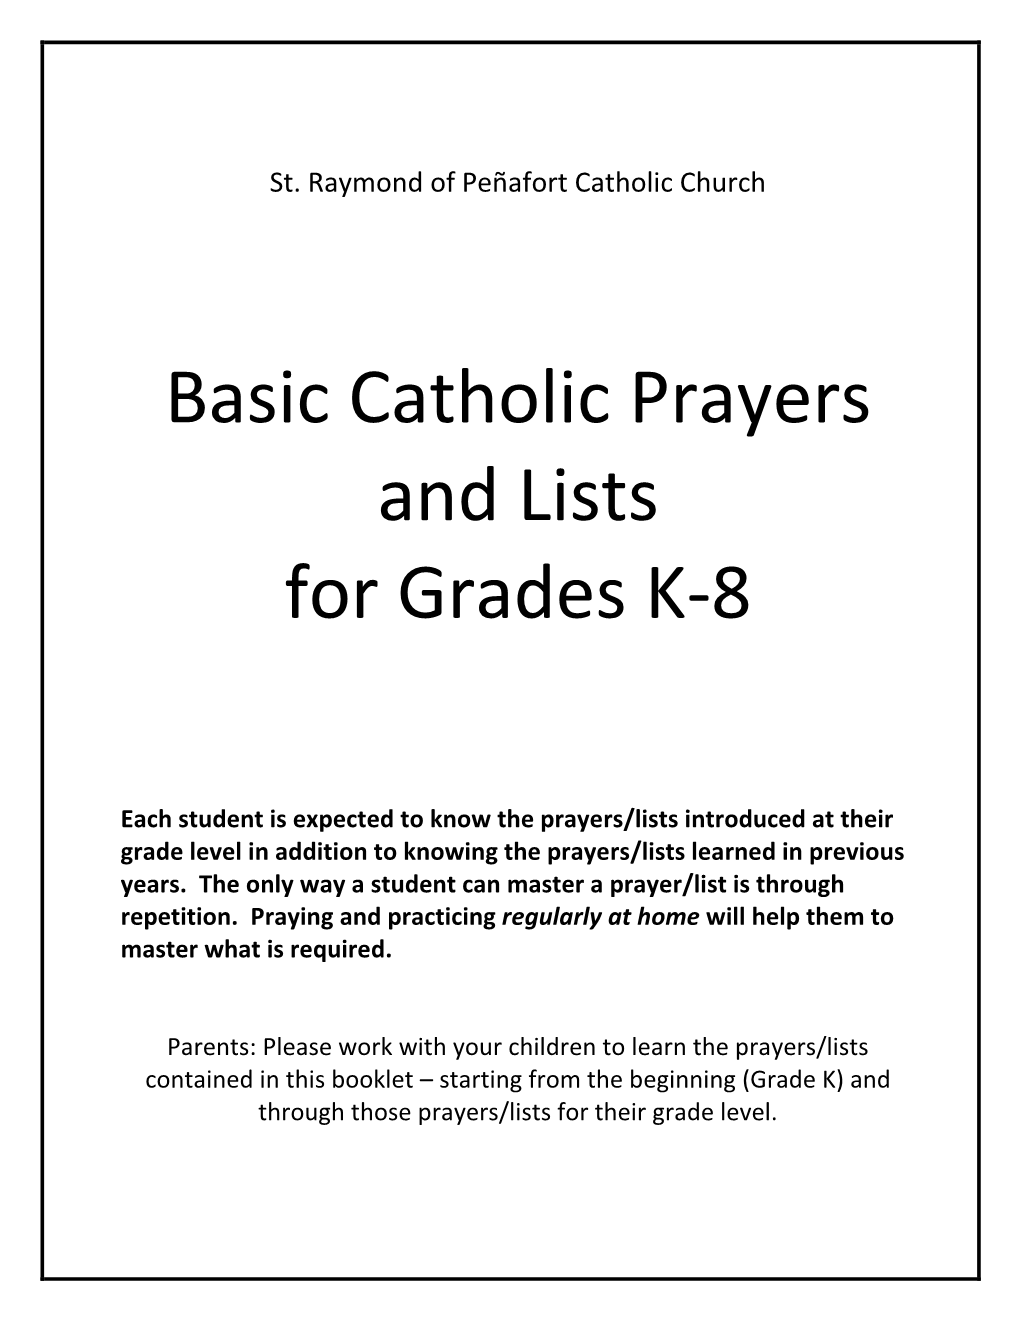 Basic Catholic Prayers and Lists for Grades K-8